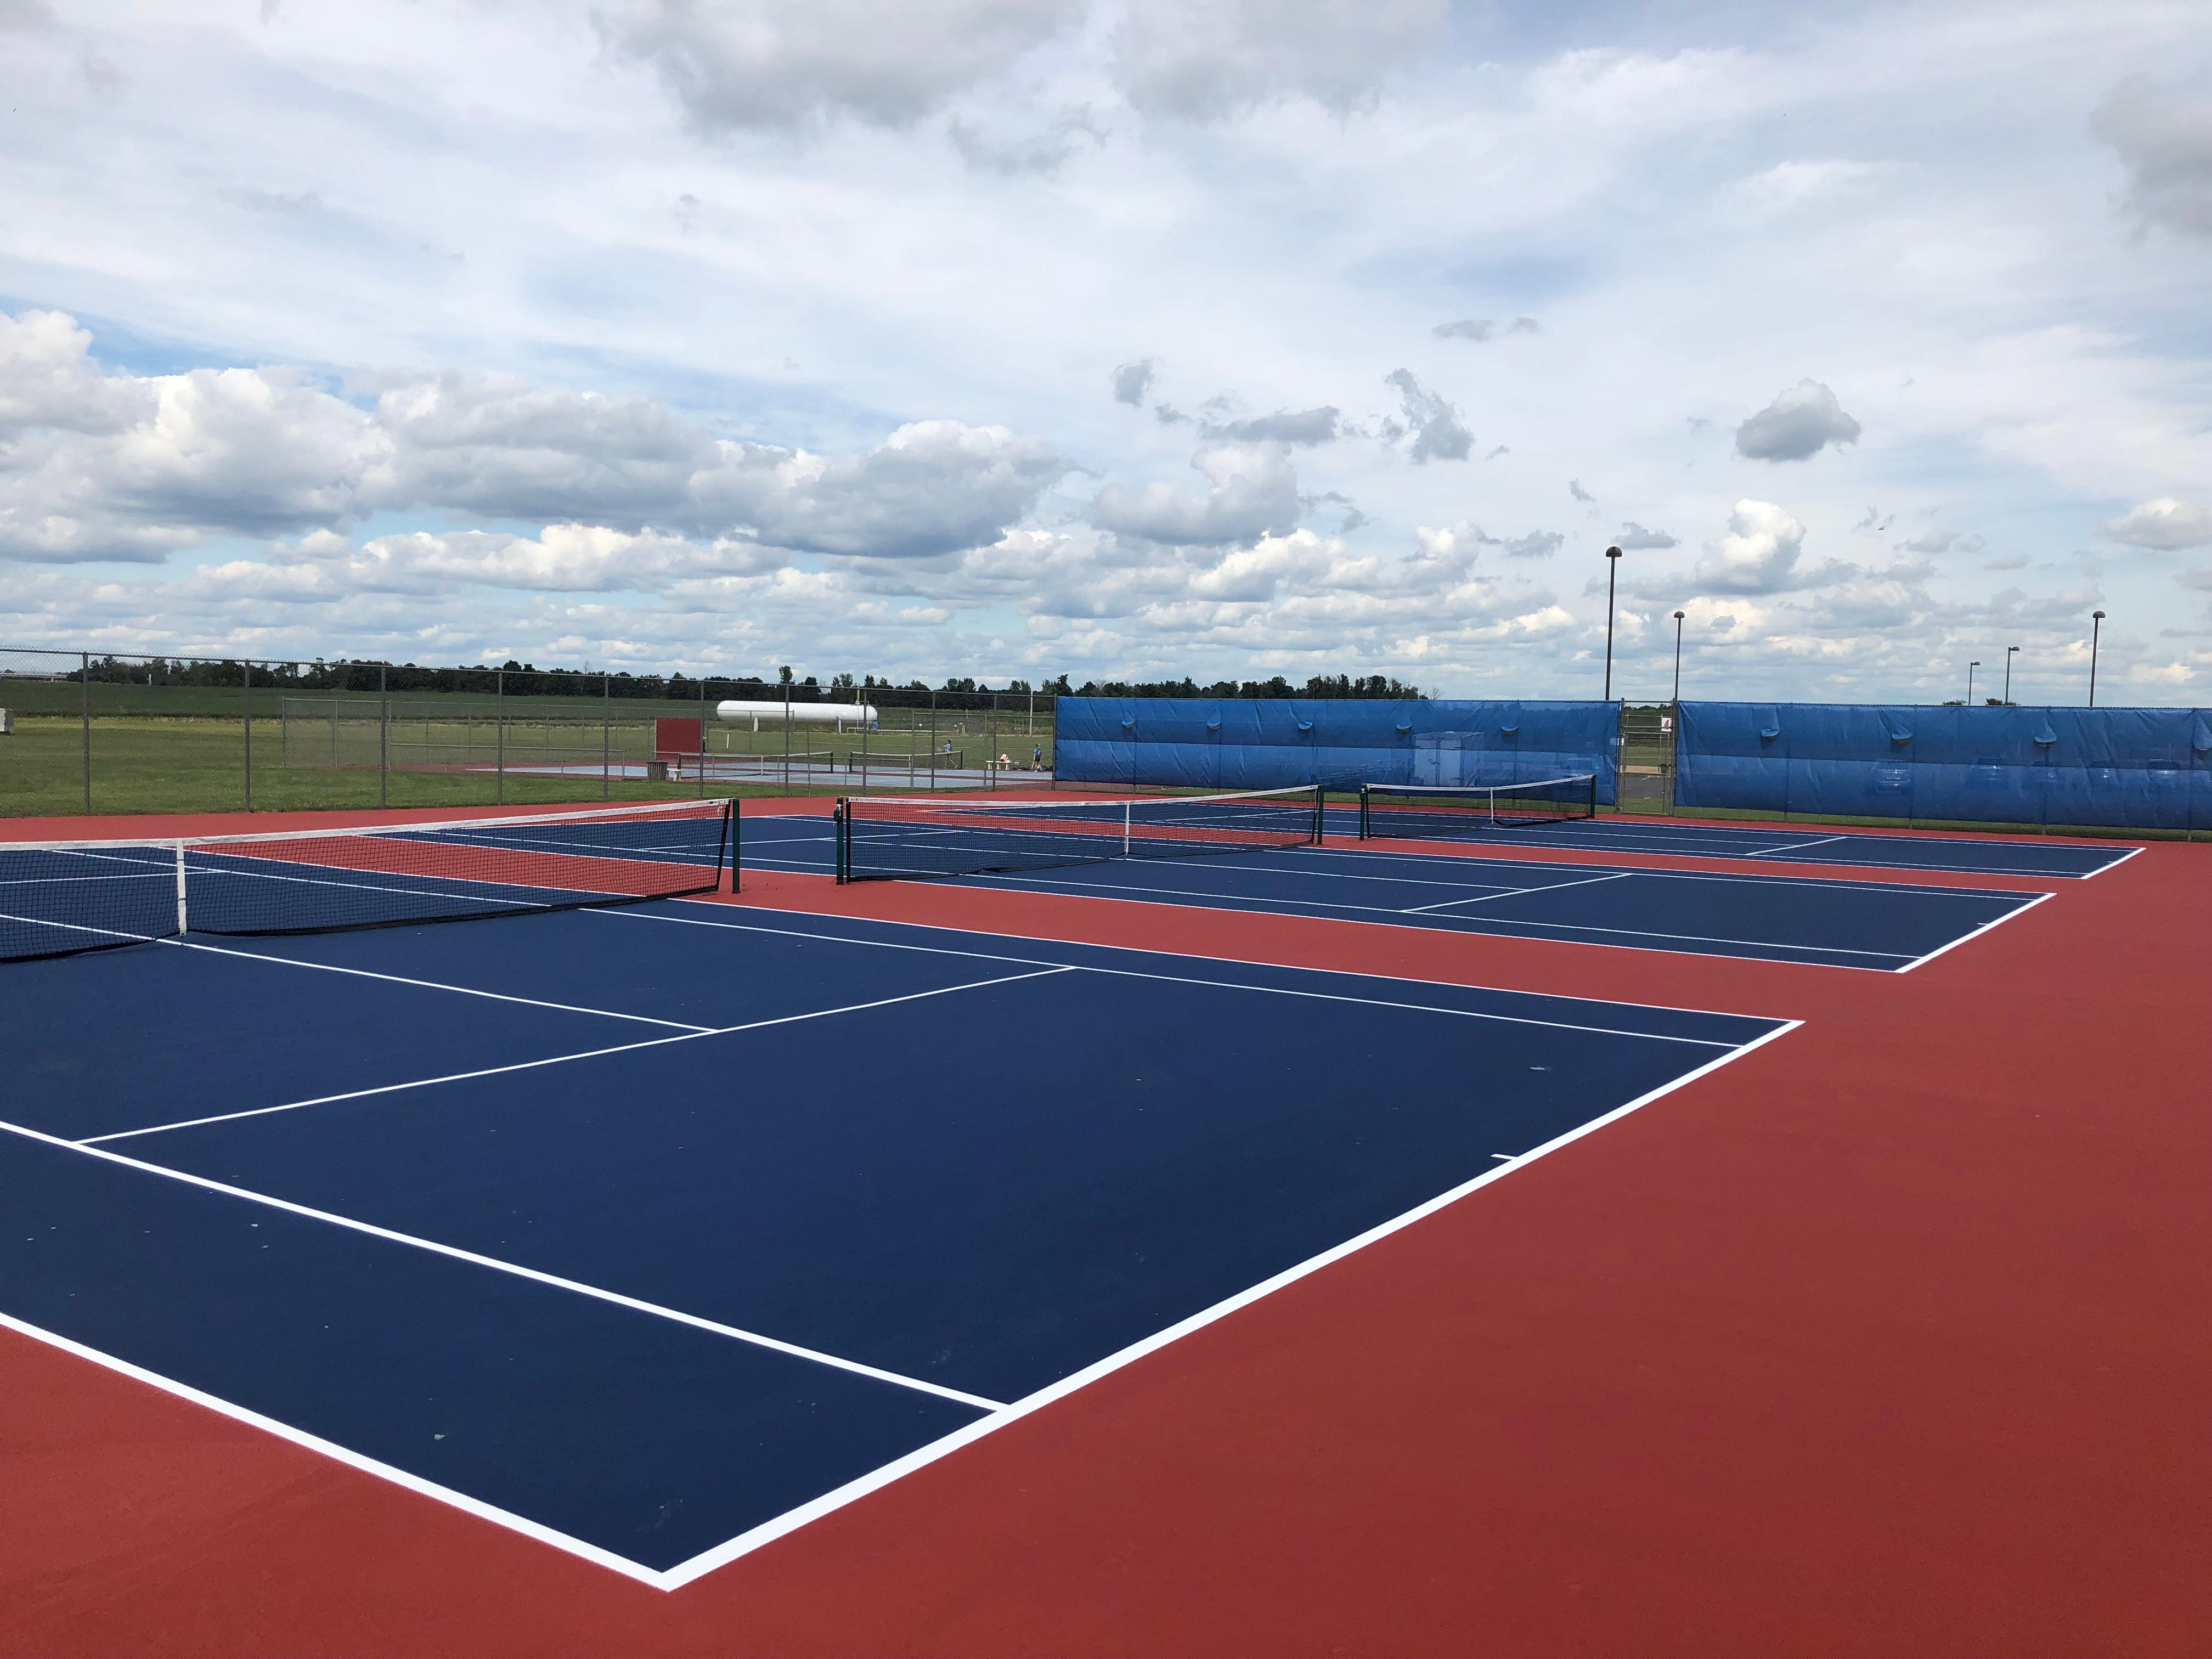 New Courts - Commercial or Residential. We are now serving Cincinnati, Columbus, Dayton, Cleveland a Schubert Tennis LLC Cincinnati (513)310-5890